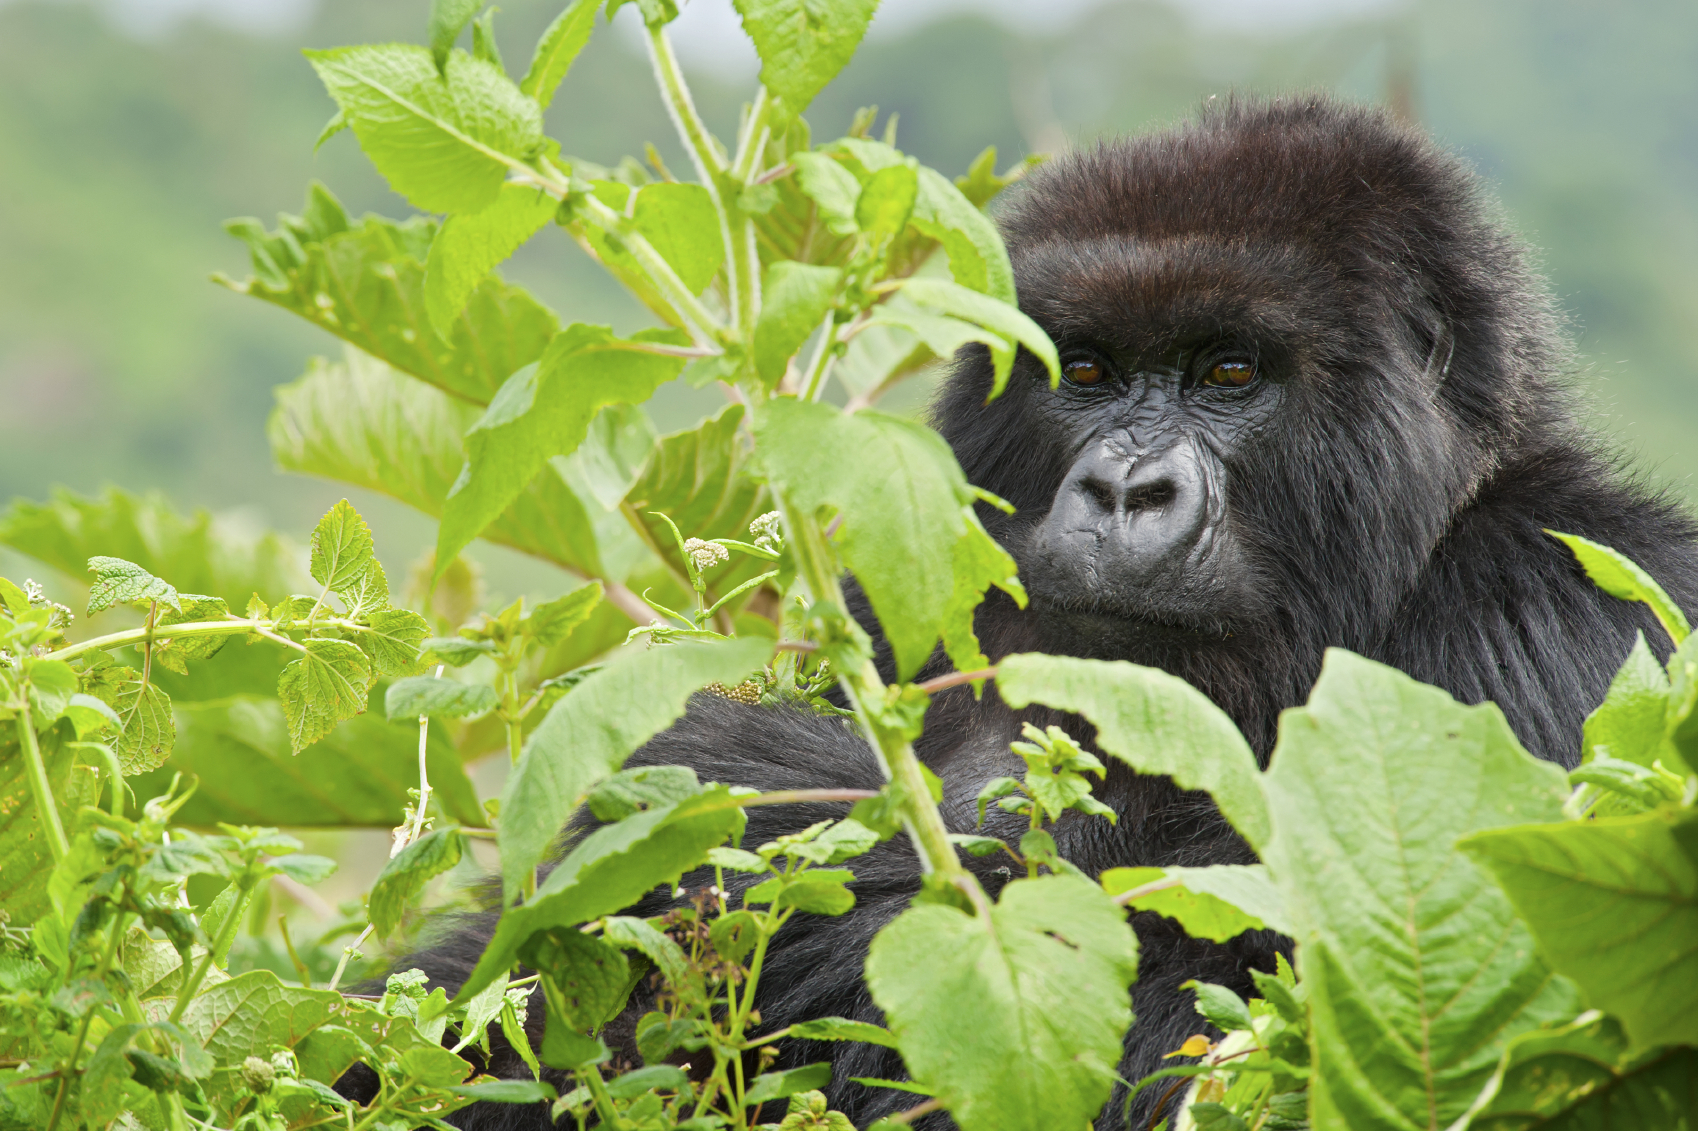 A gorilla in the Rwandan rainforest